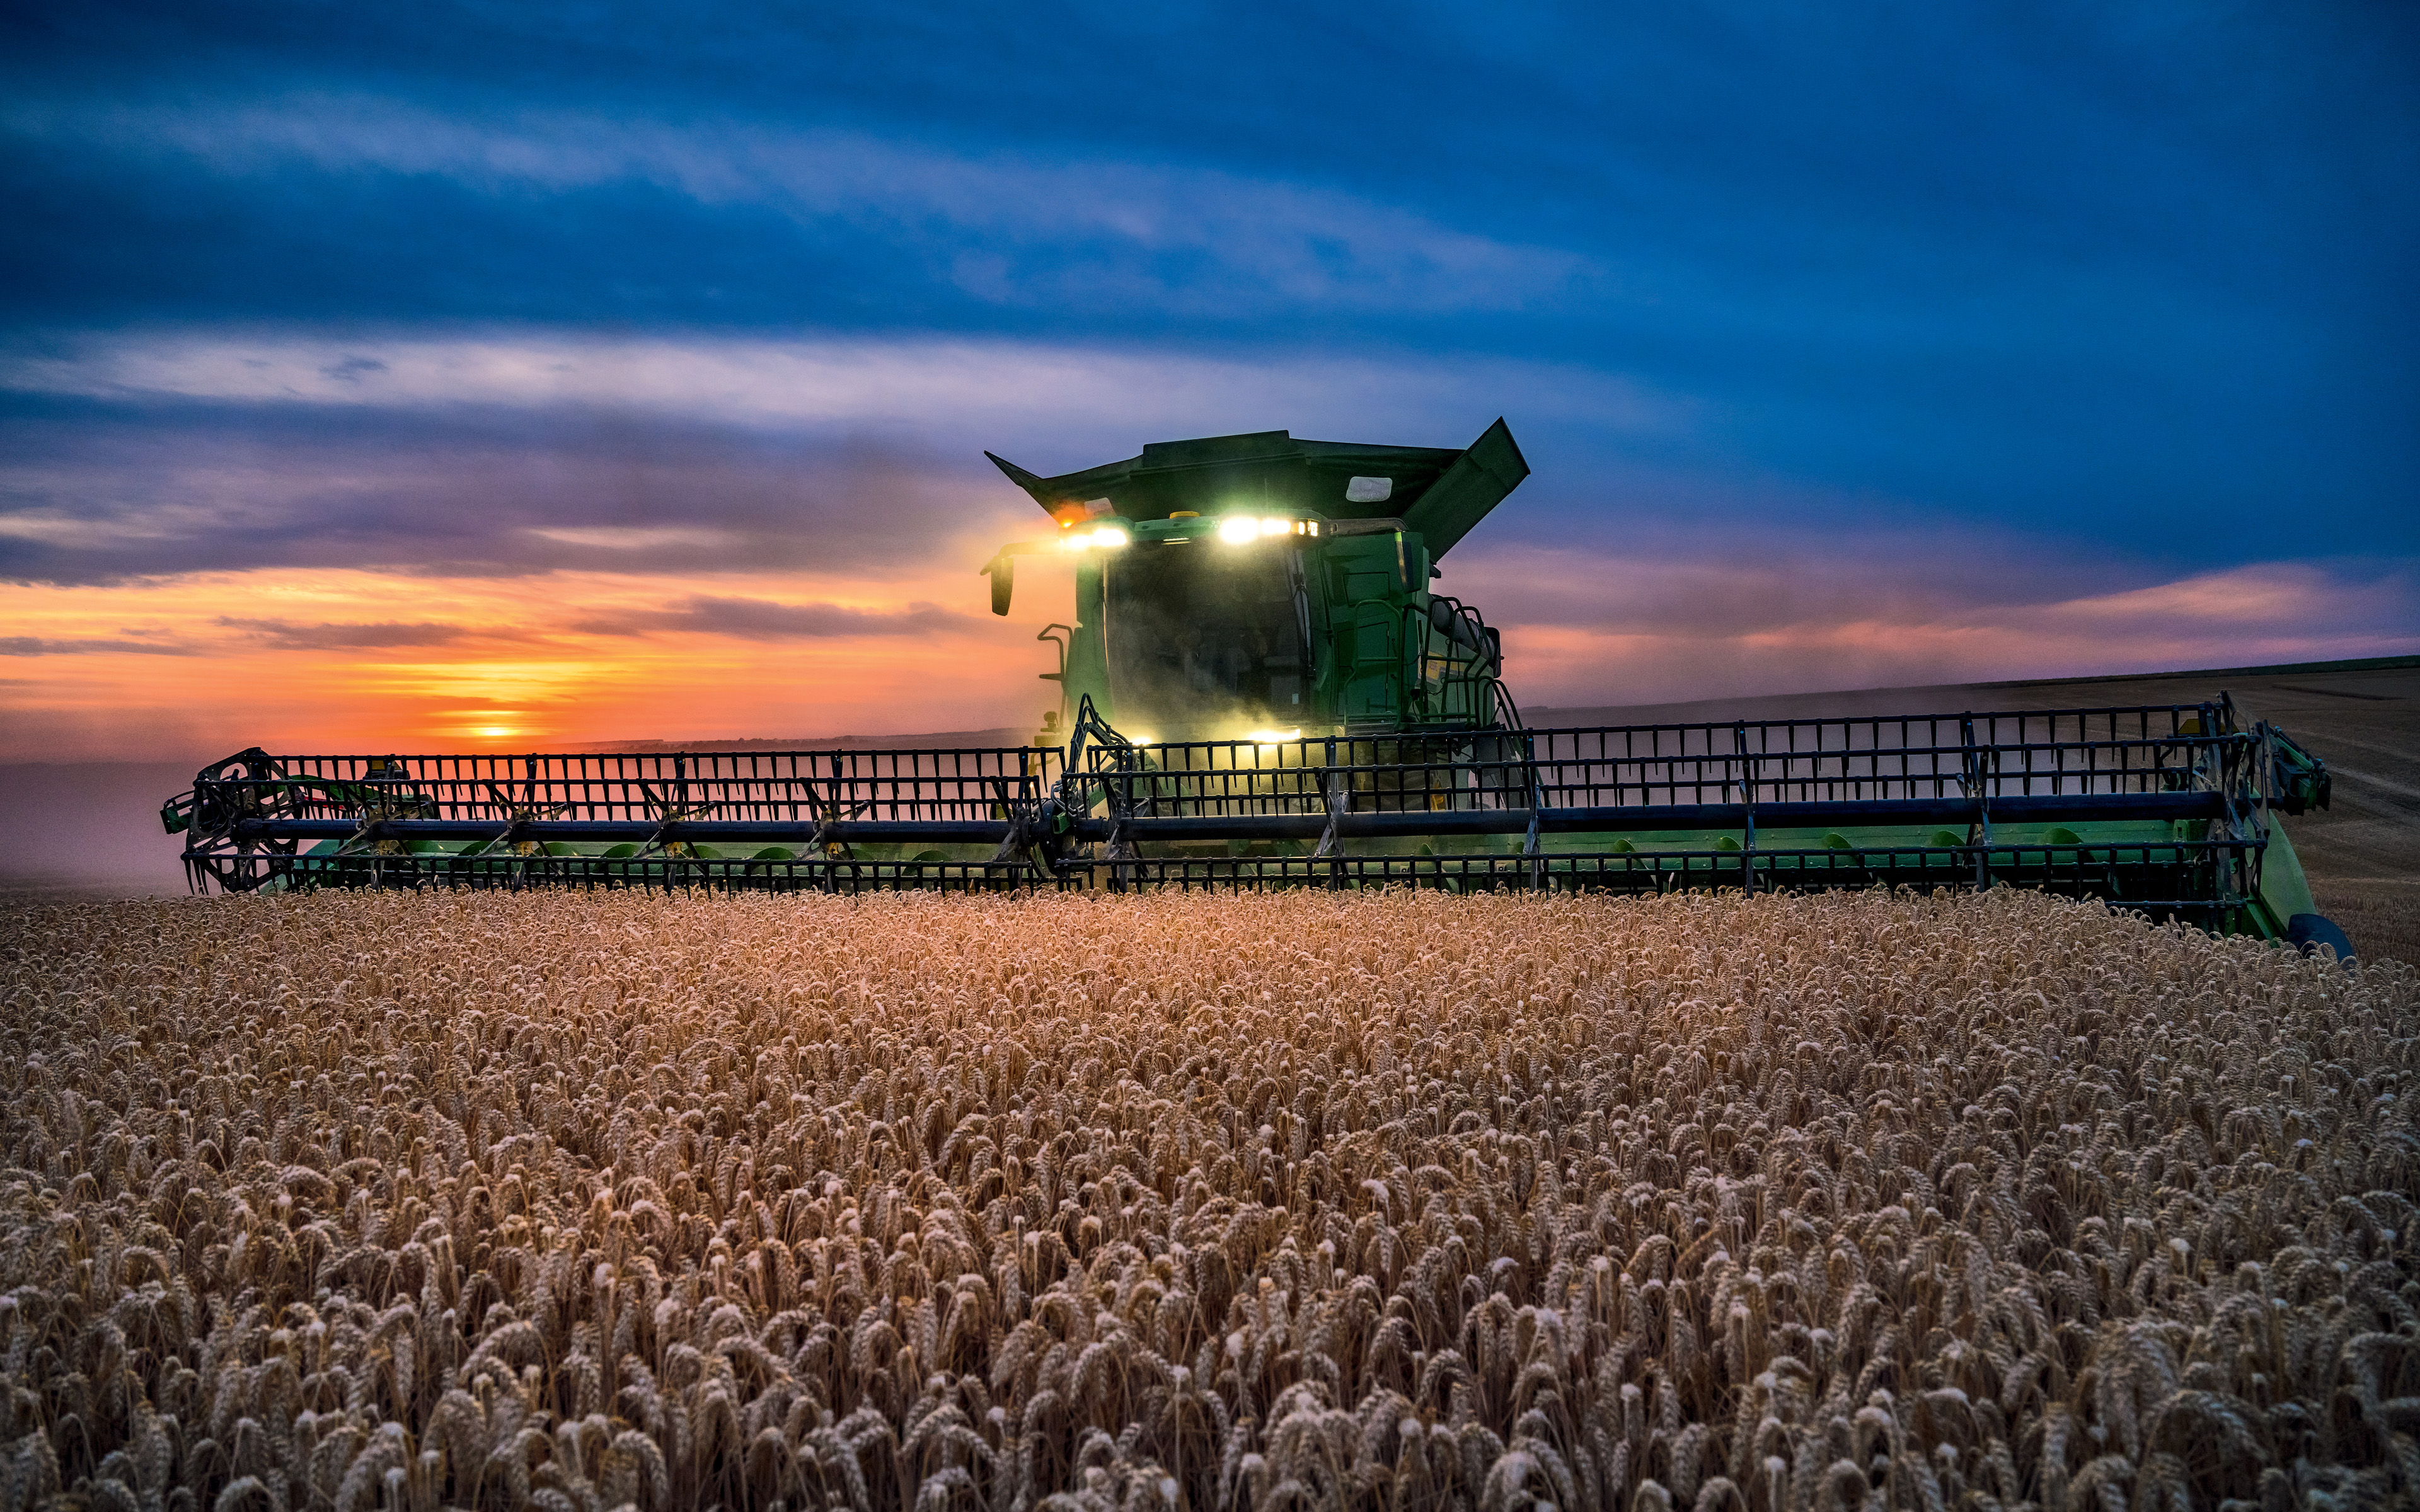 Download wallpaper 4k, John Deere X sunset, combine harvester, 2021 combines, wheat harvest, harvesting concepts, John Deere X9 Series, HDR, agriculture concepts, John Deere for desktop with resolution 3840x2400. High Quality HD